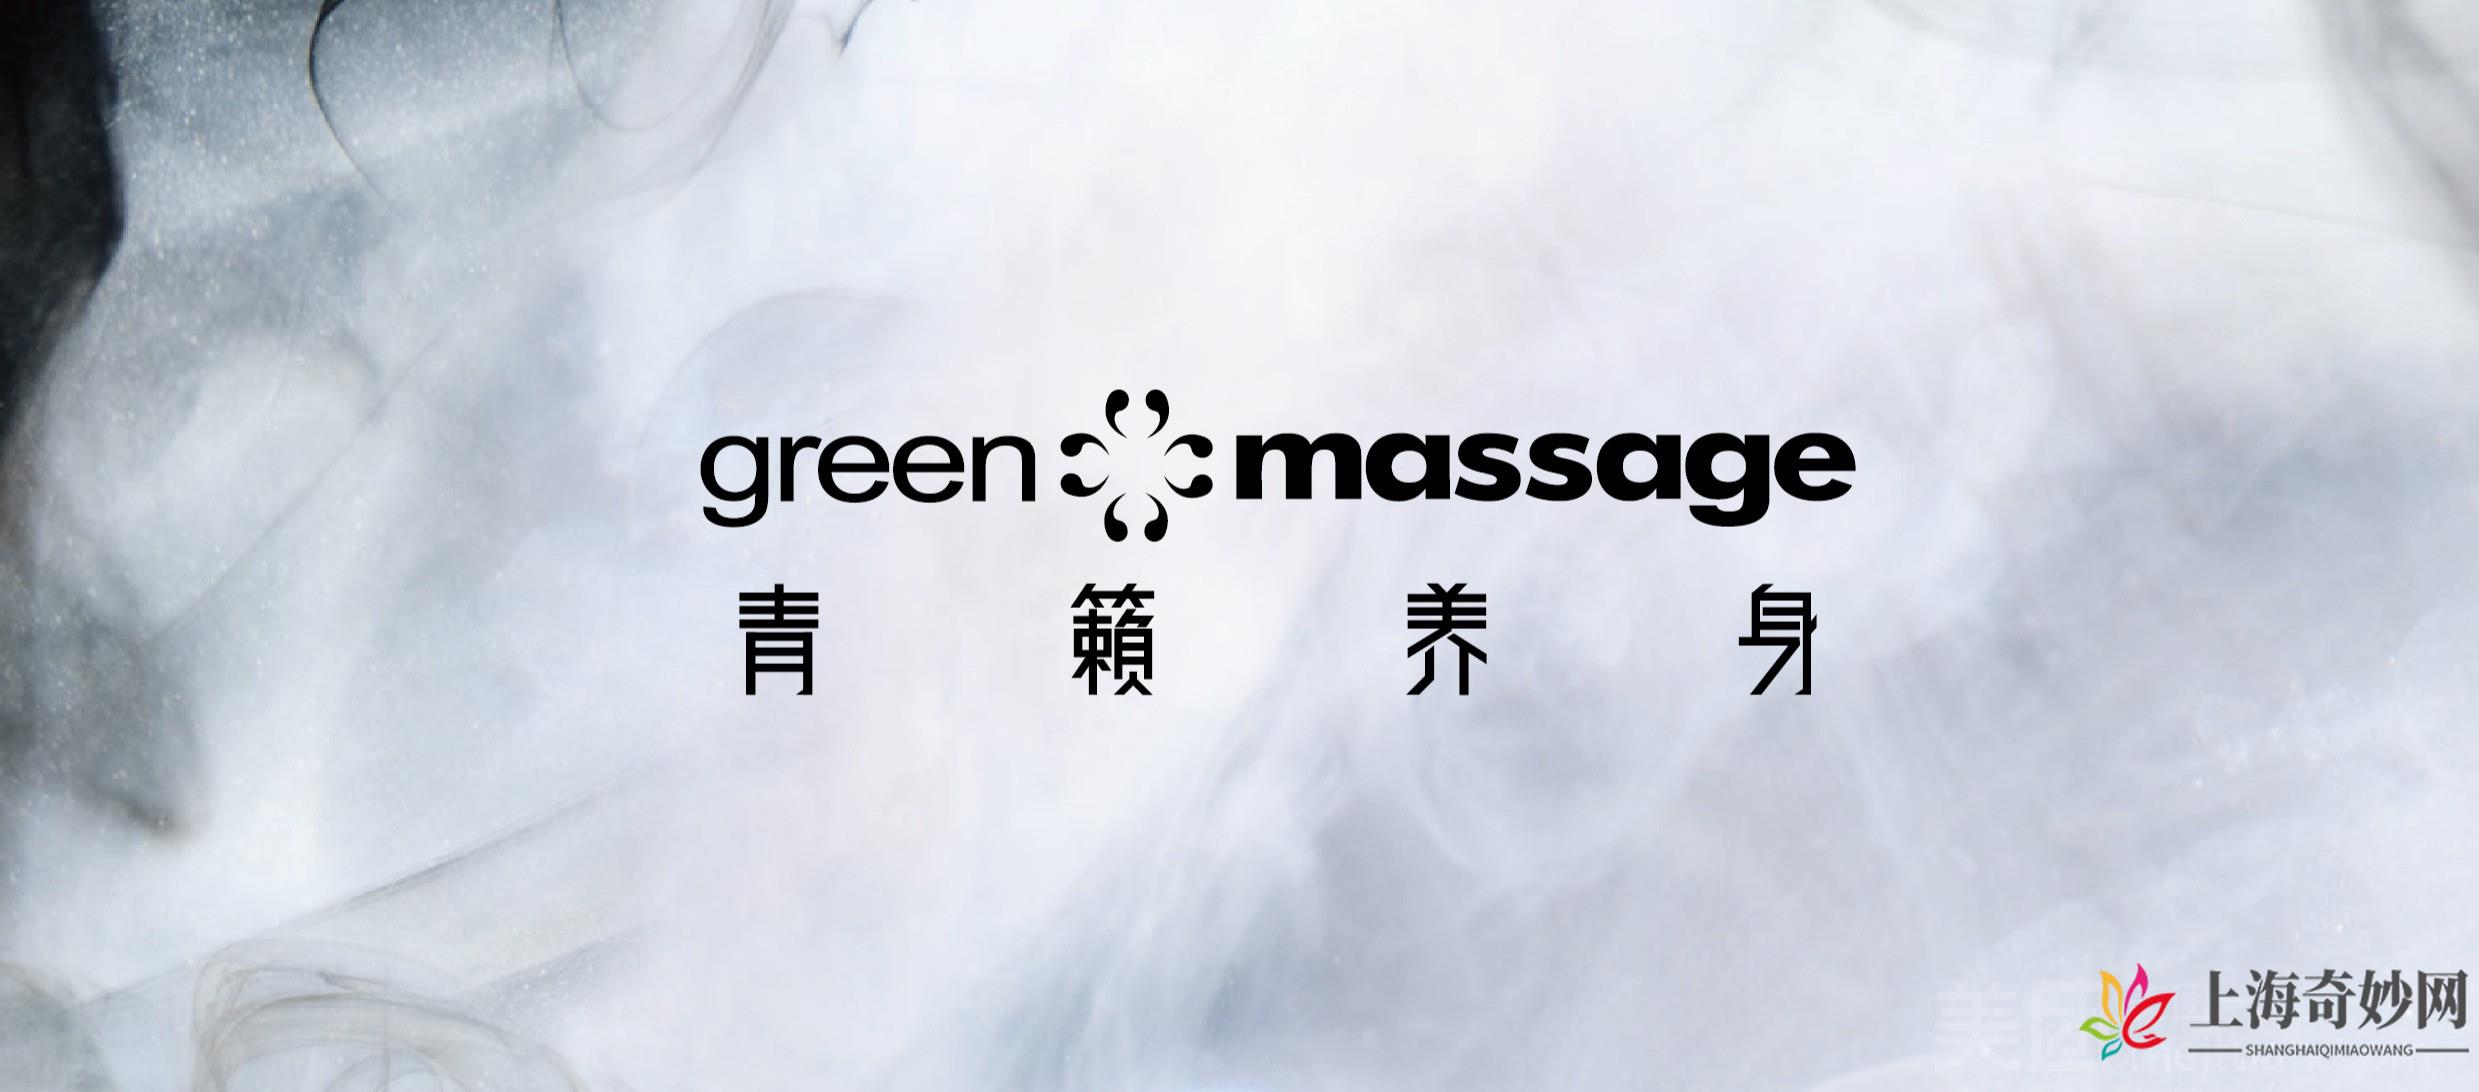 green massage 青籟养身（上海商城二店）